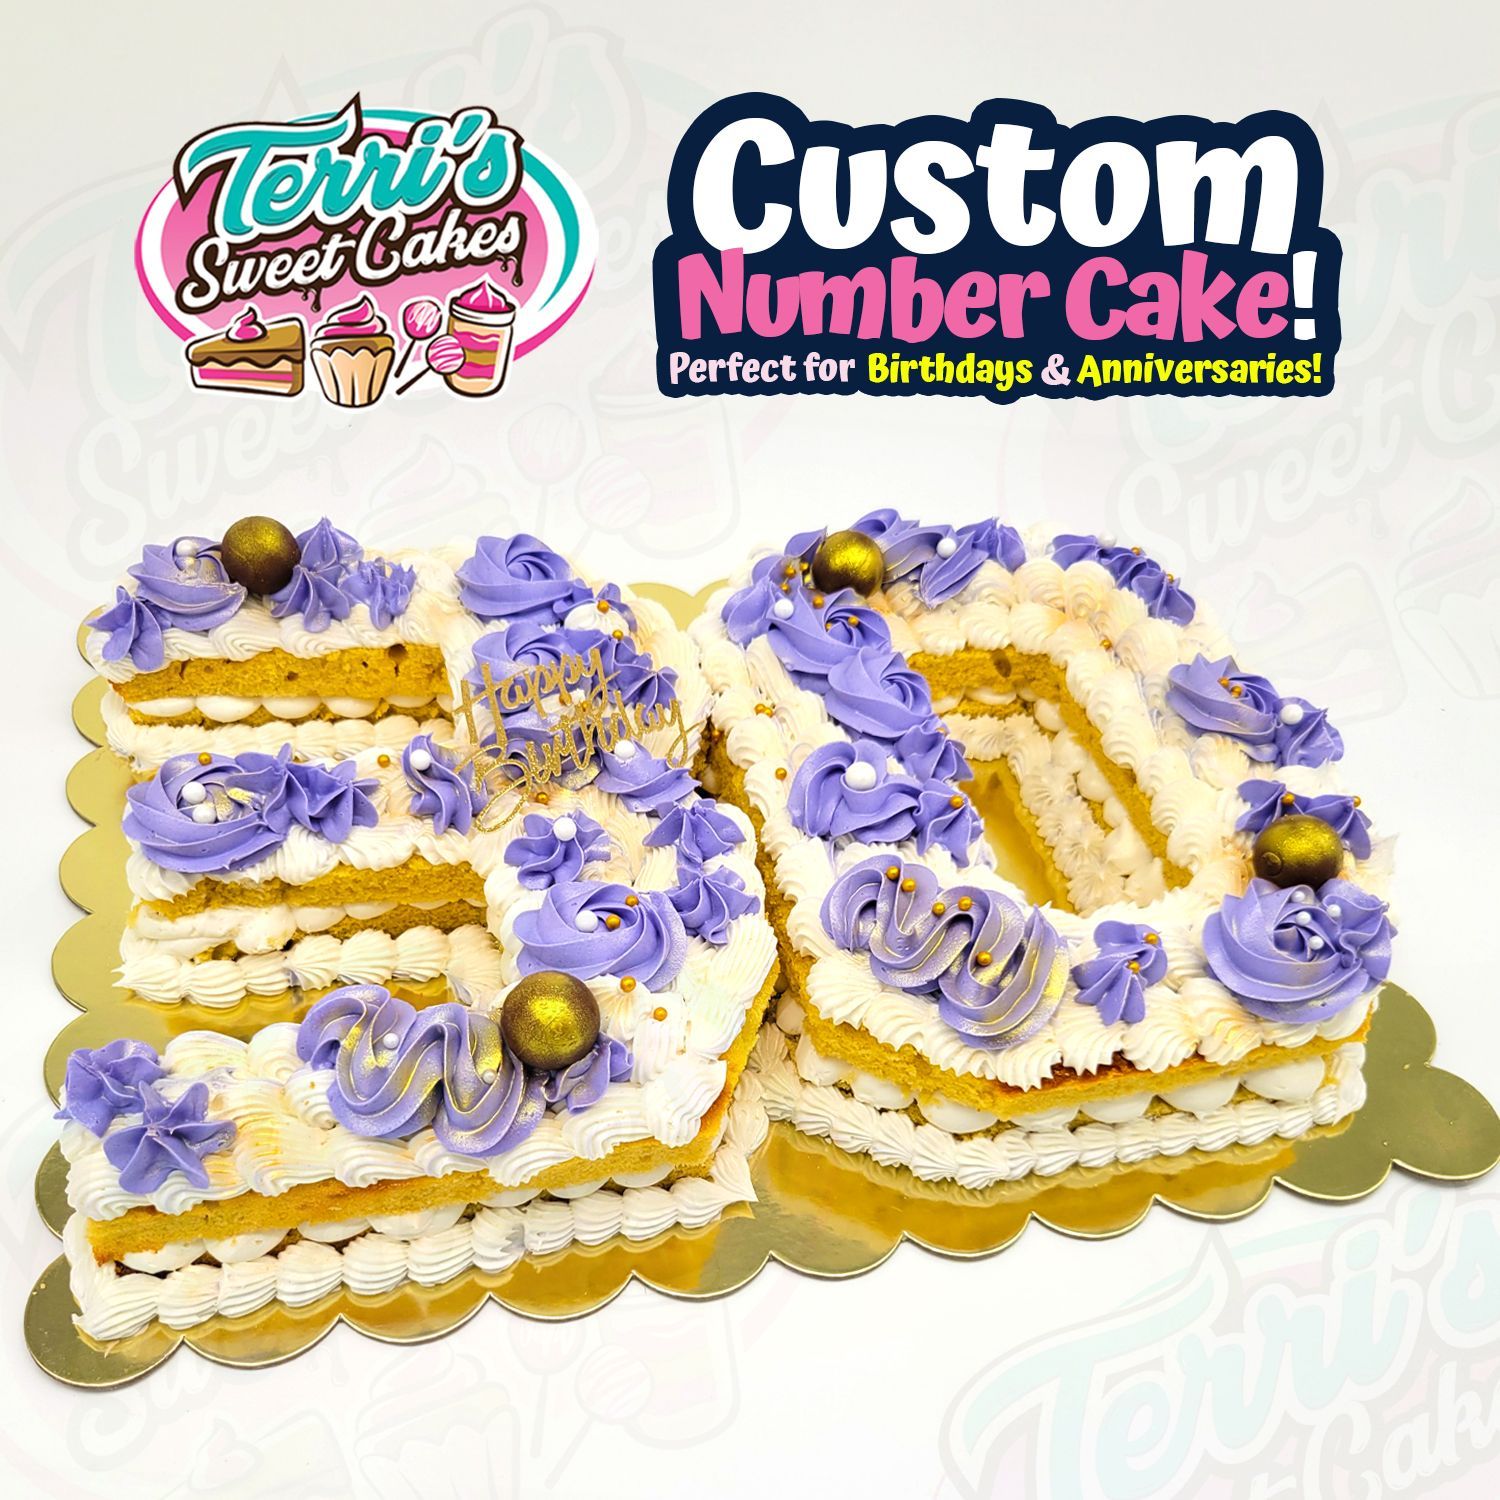 Custom Number Cake by Terri's Sweet Cakes!